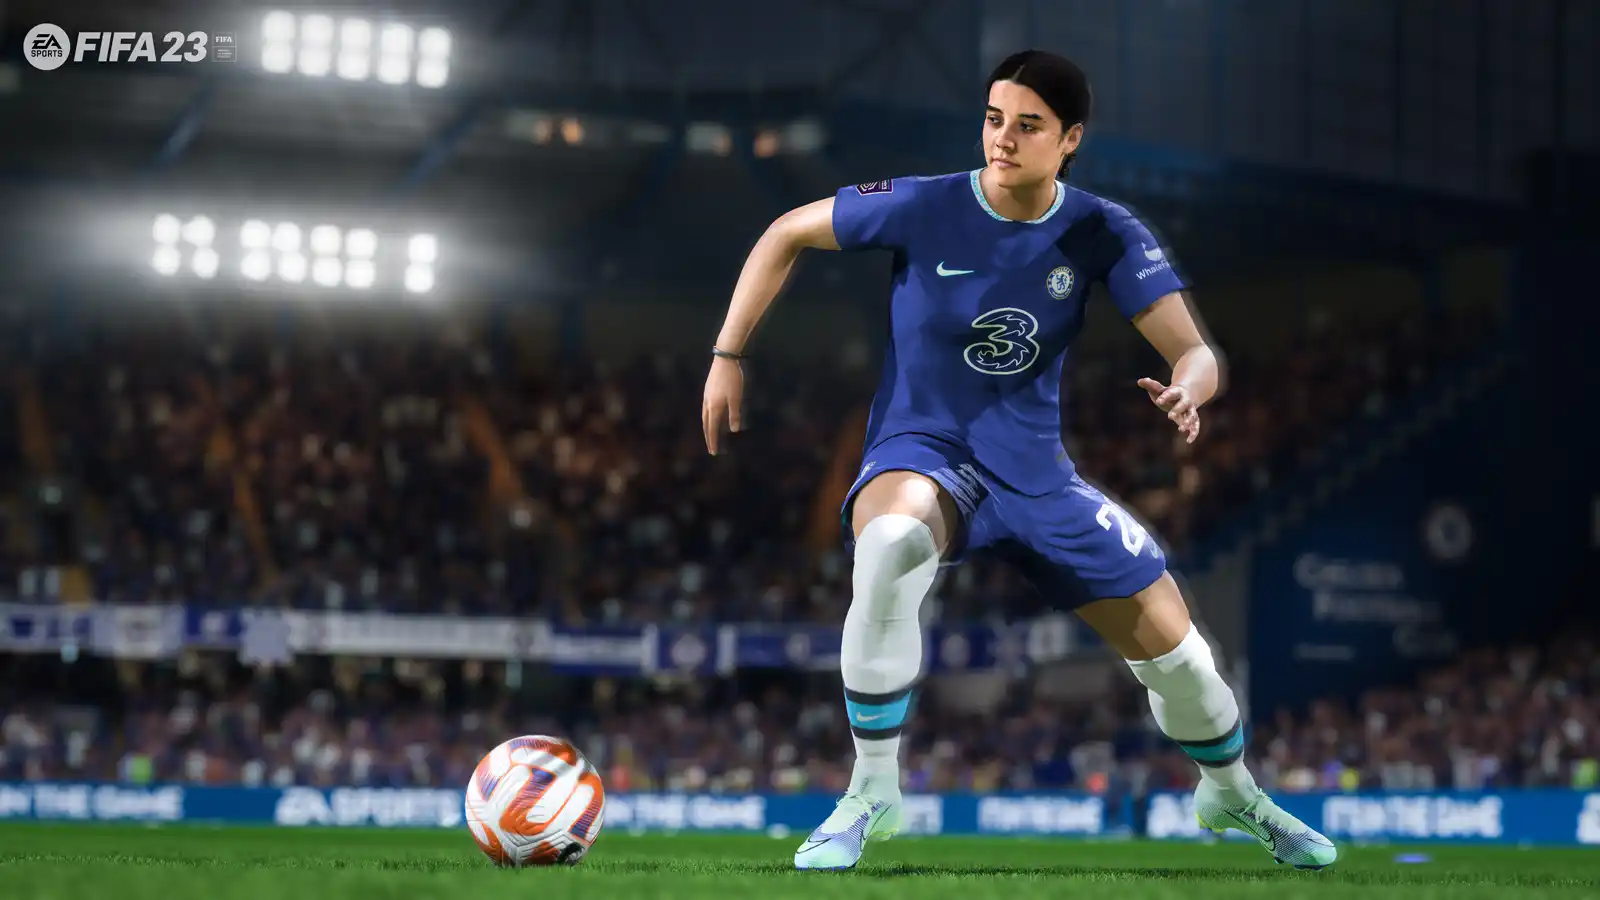 Chelsea womens footballer in FIFA 23